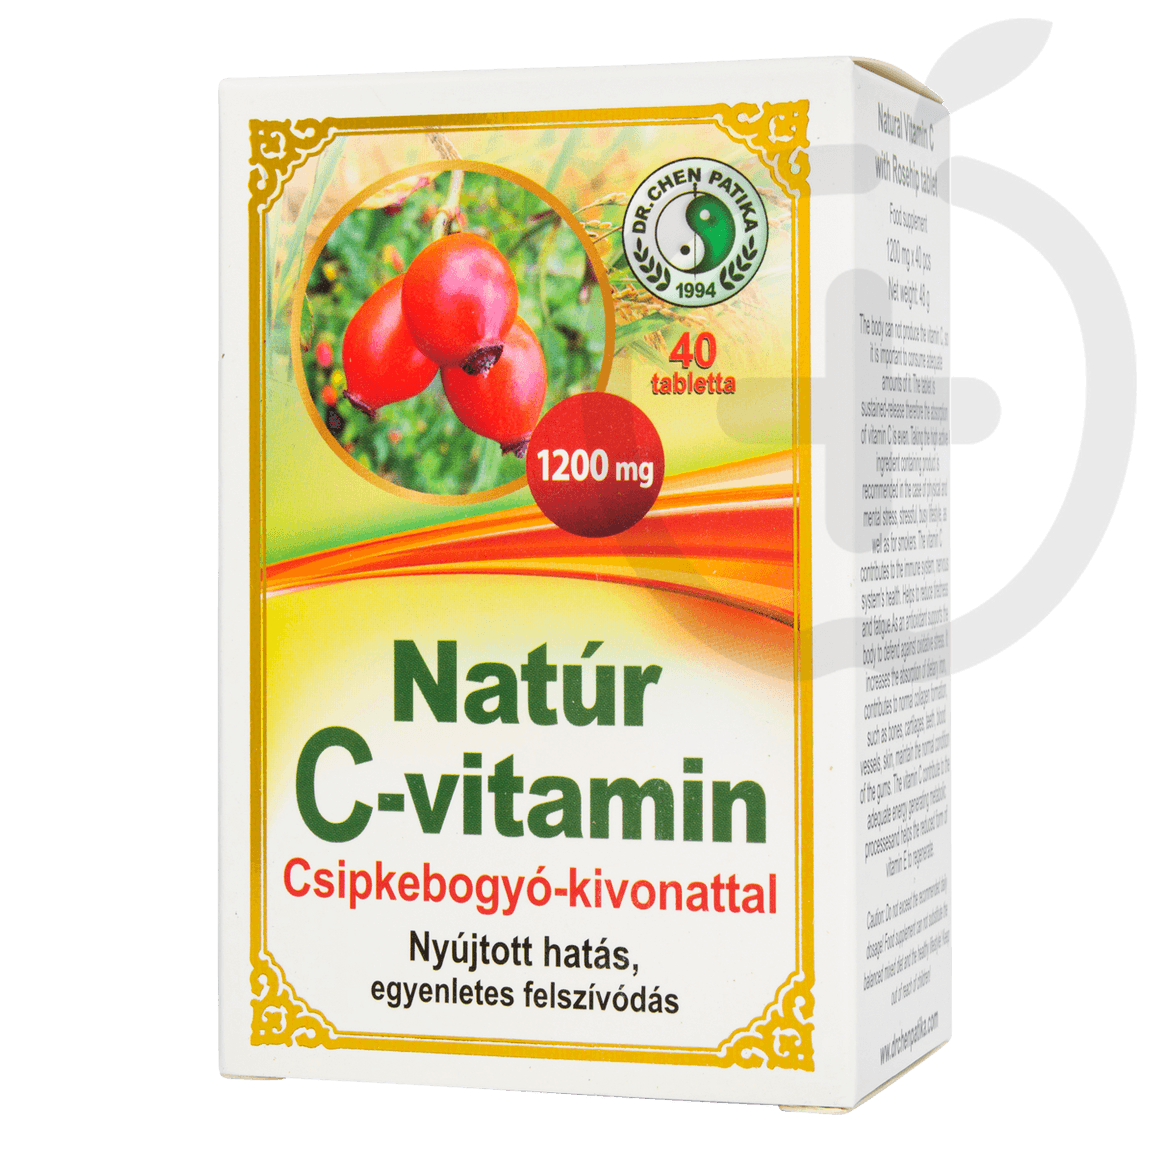 Dr. Chen Natúr C-vitamin 1200 mg csipkebogyó kivonattal tabletta 40 db